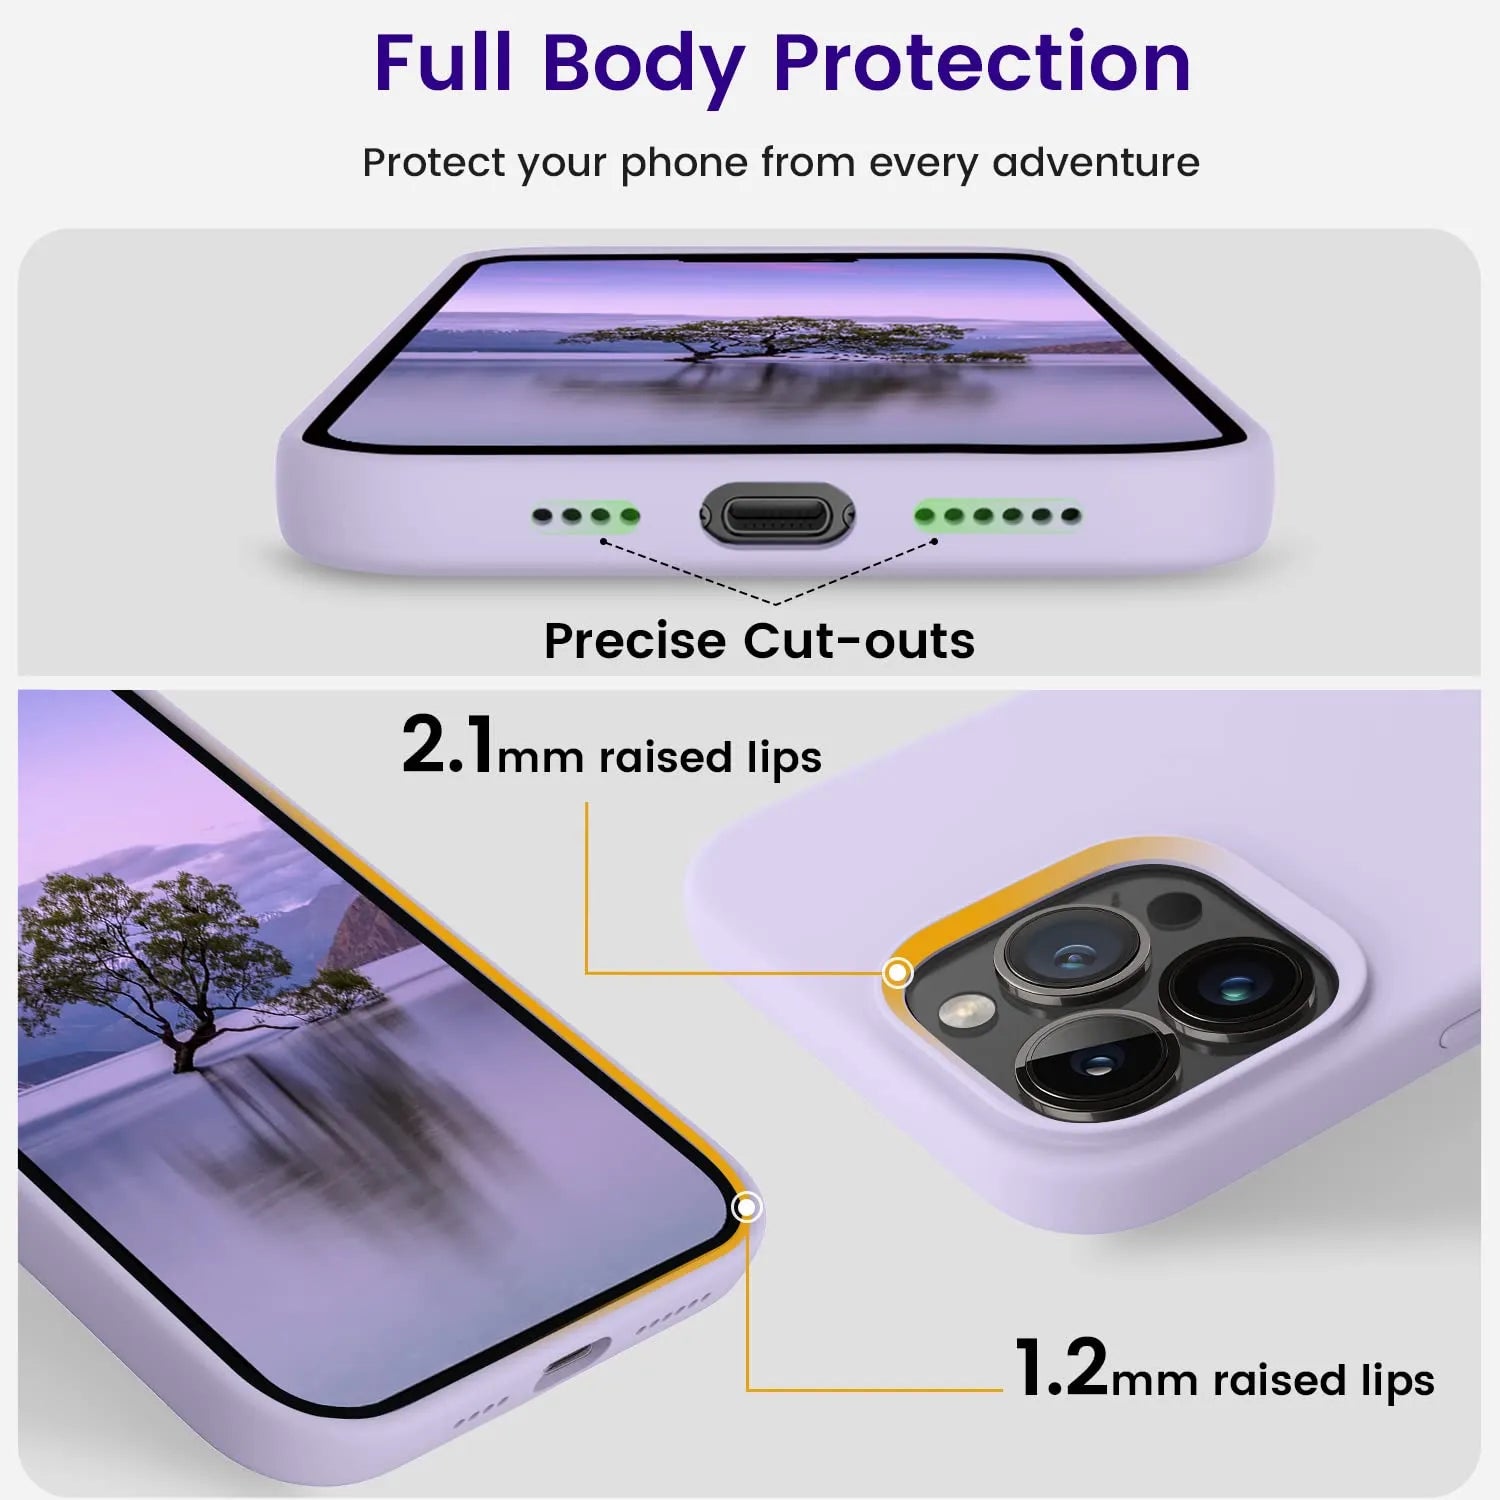 iPhone 14 Pro Max Silicone Case